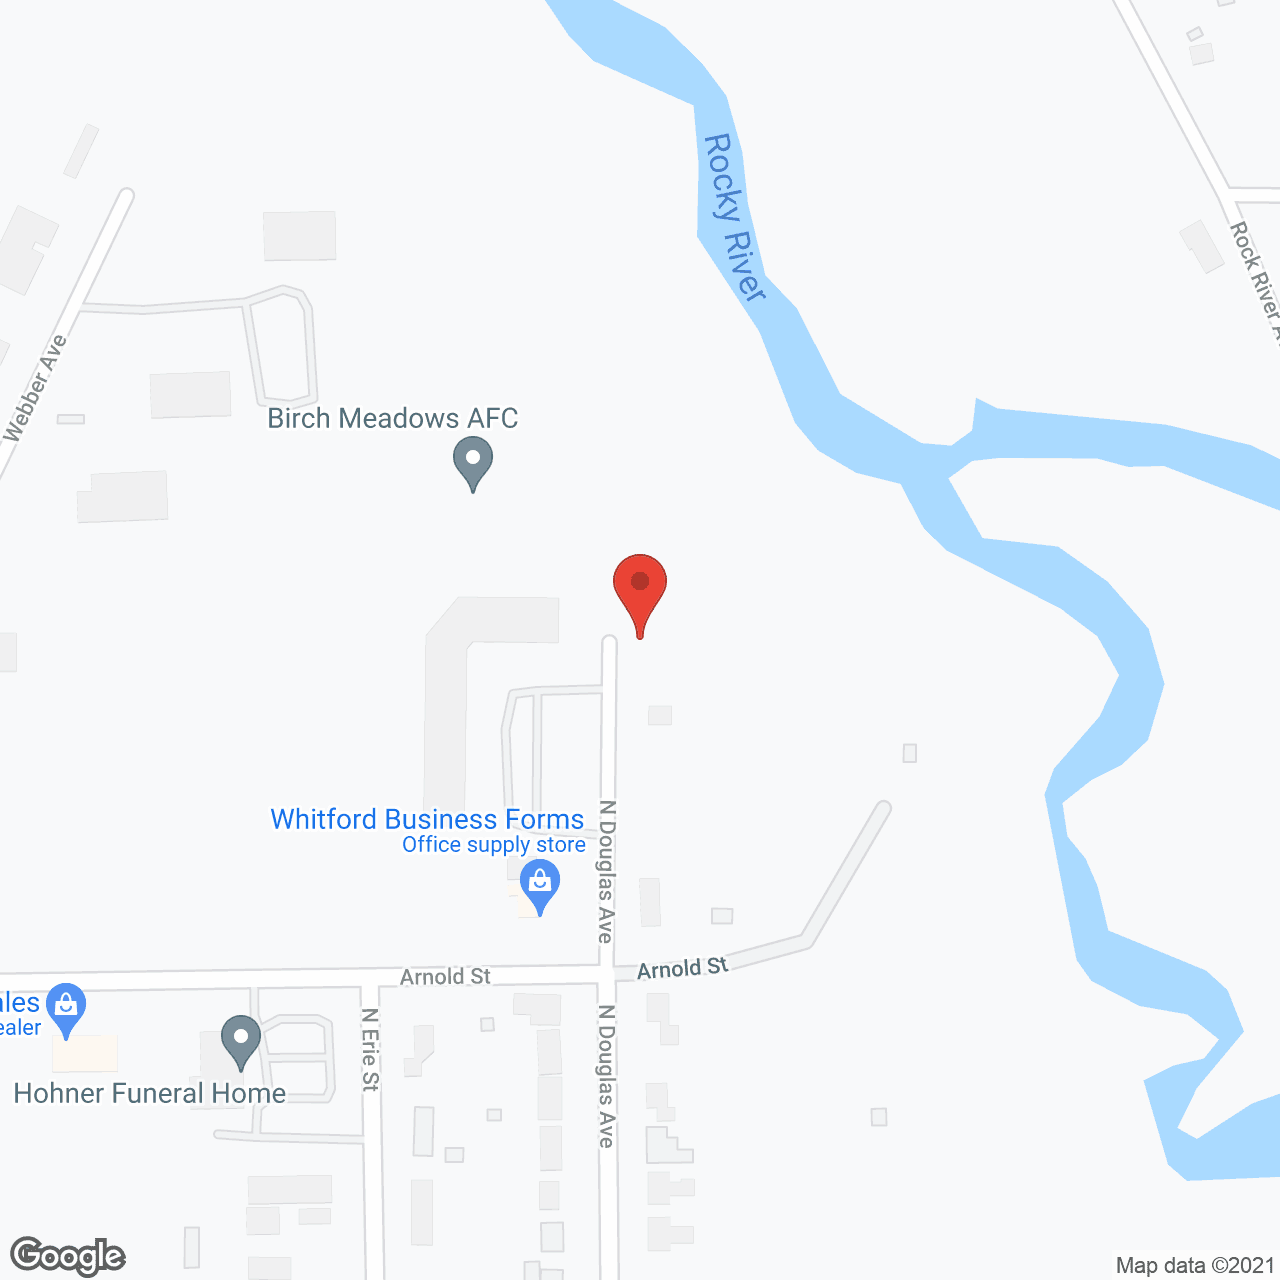 Birch Meadows in google map